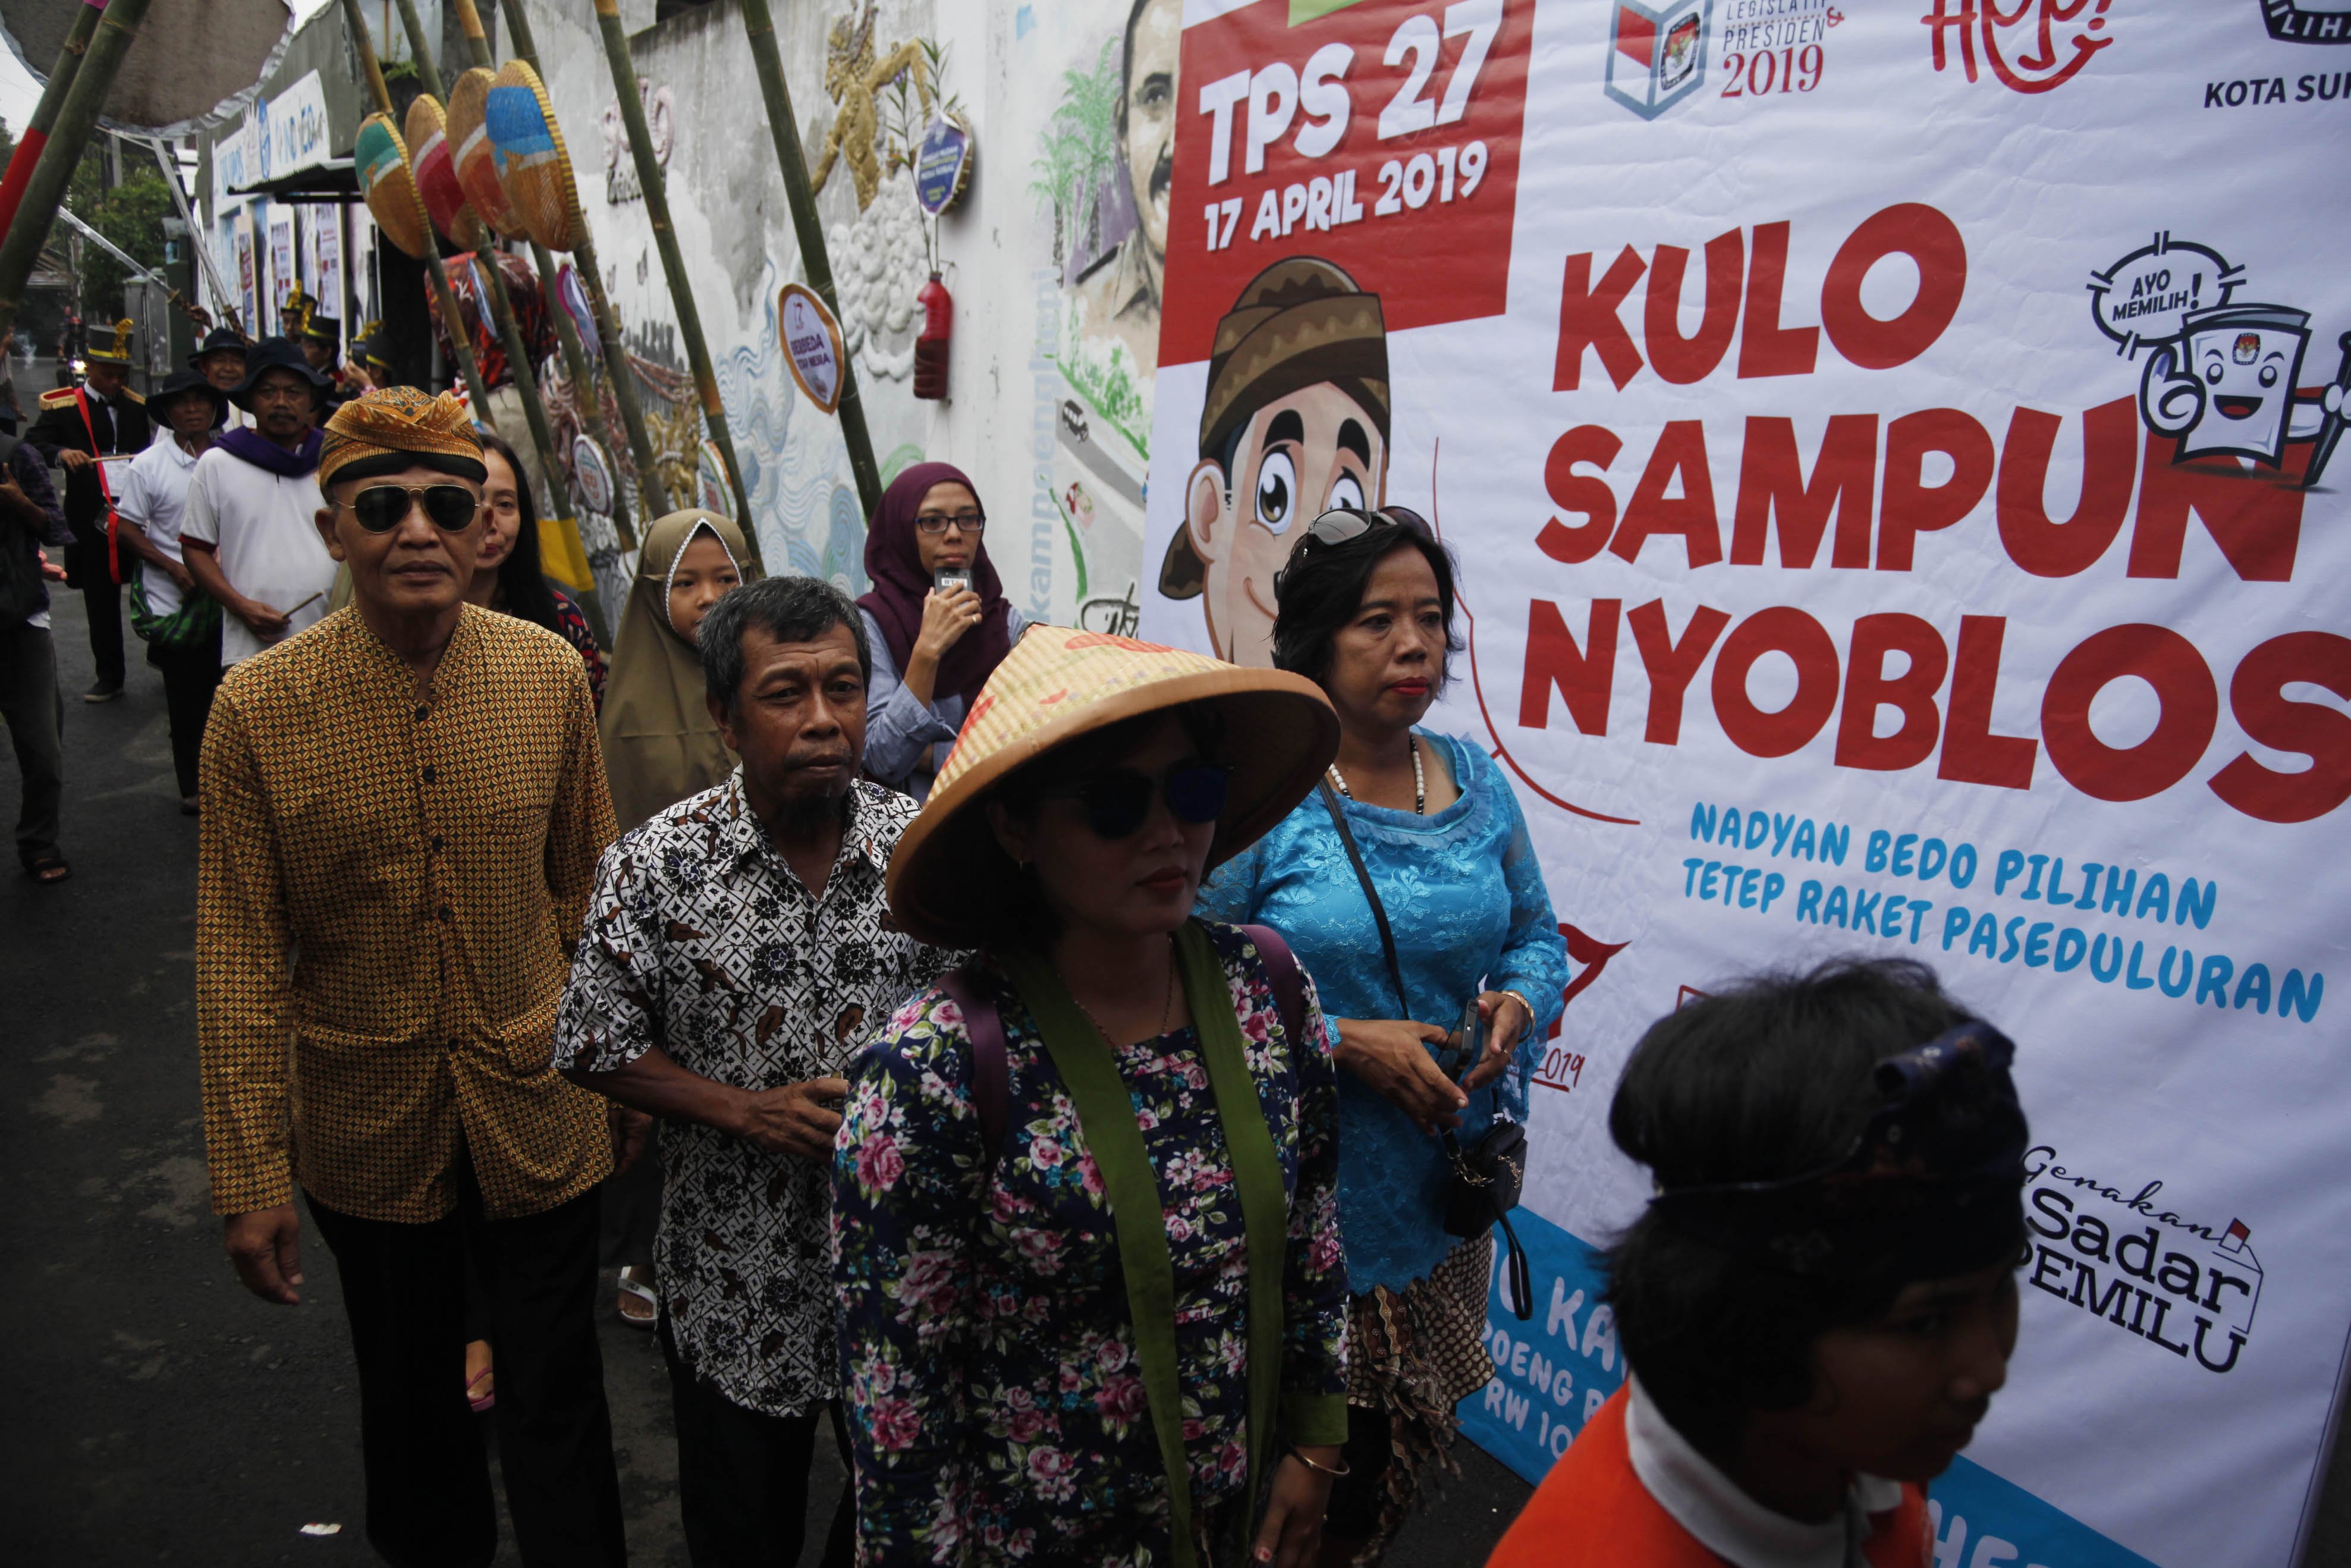 Warga mengikuti kirab menuju Tempat Pemungutan Suara (TPS) 27 Kampung Happy, Manahan, Solo, Jawa Tengah, Rabu (17/4/2019). Aksi tersebut merupakan bentuk antusiasme warga setempat menyambut pesta demokrasi Pemilu 2019.